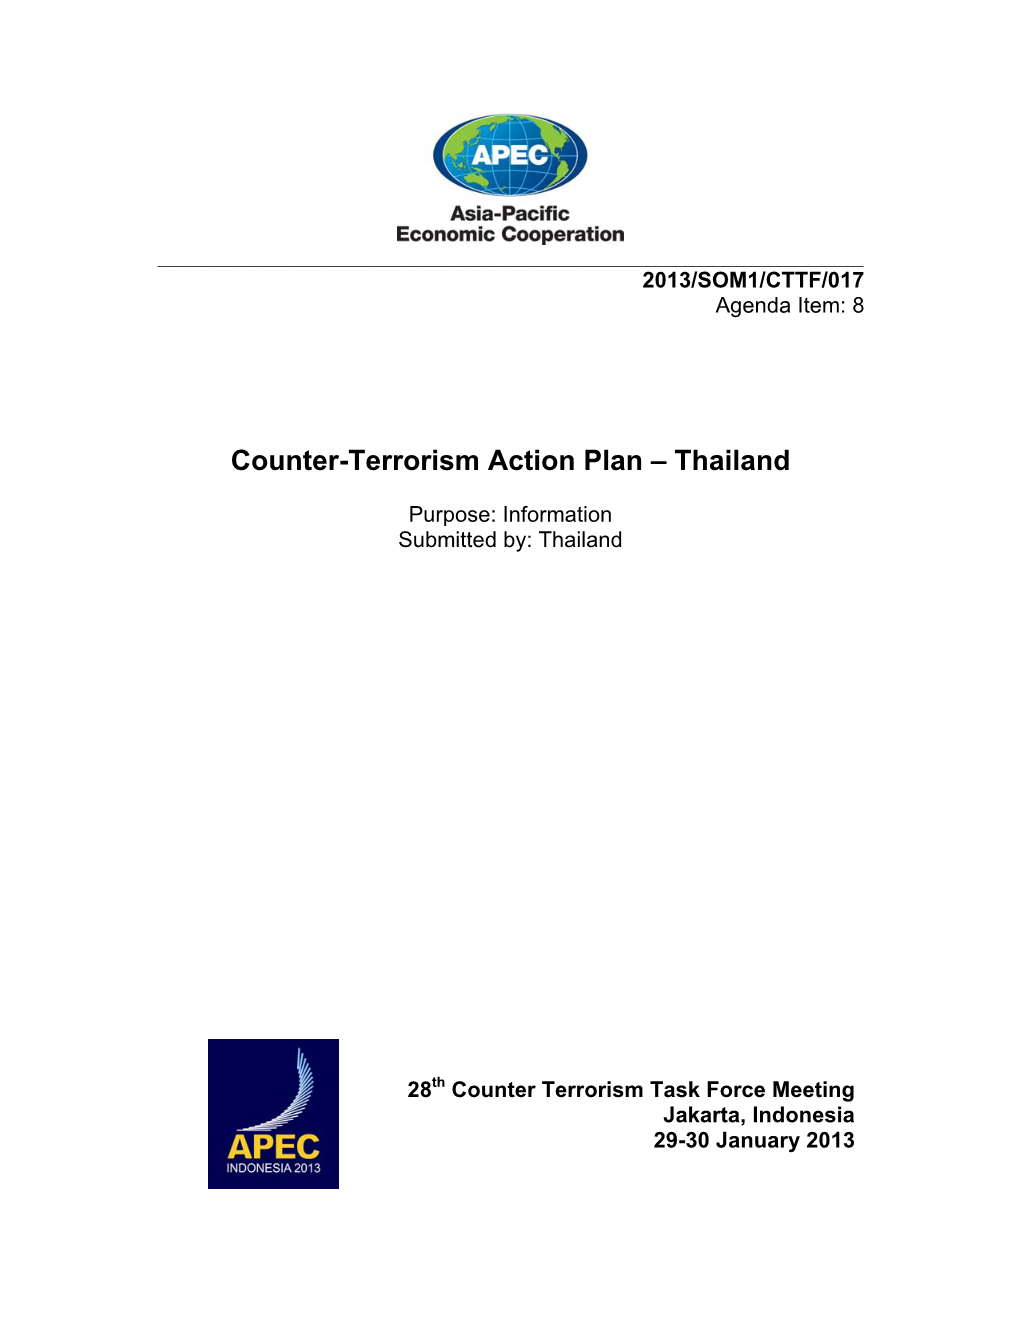 Counter-Terrorism Action Plan – Thailand